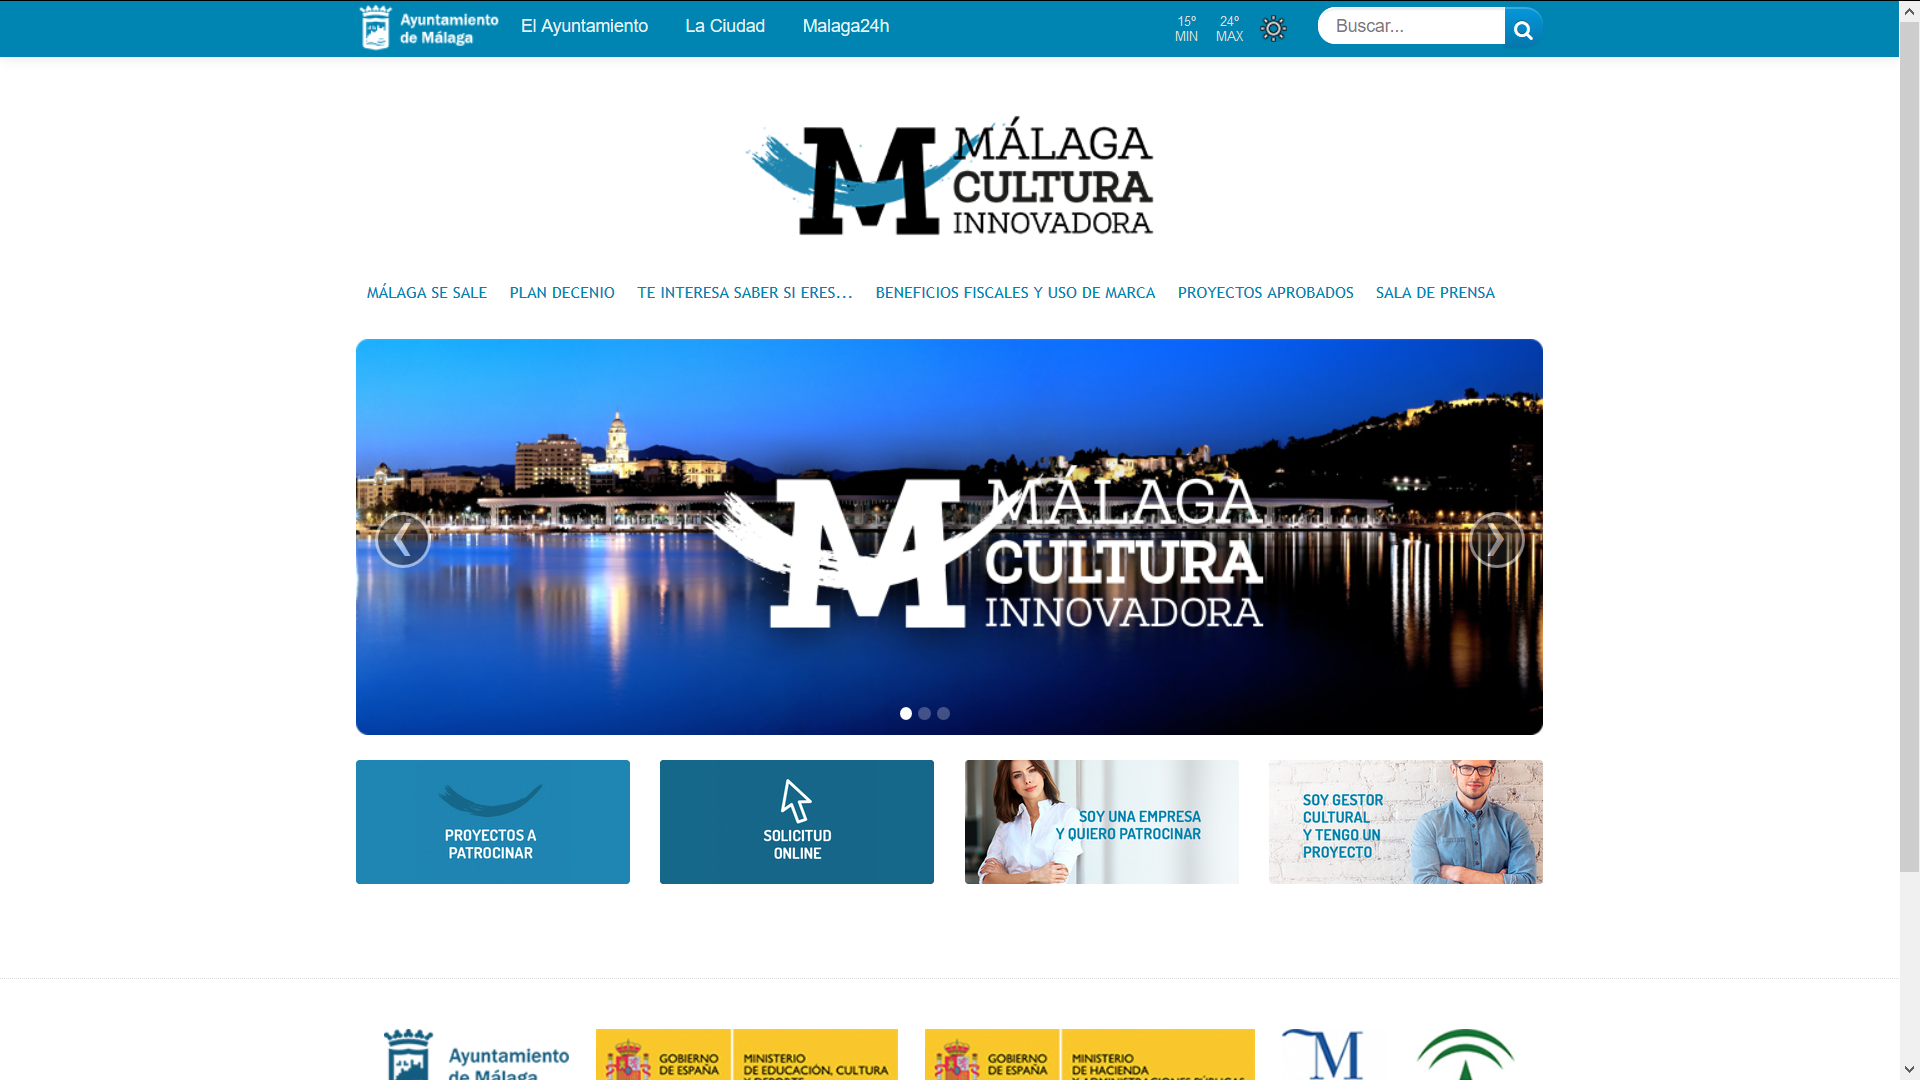 Málaga cultura innovadora